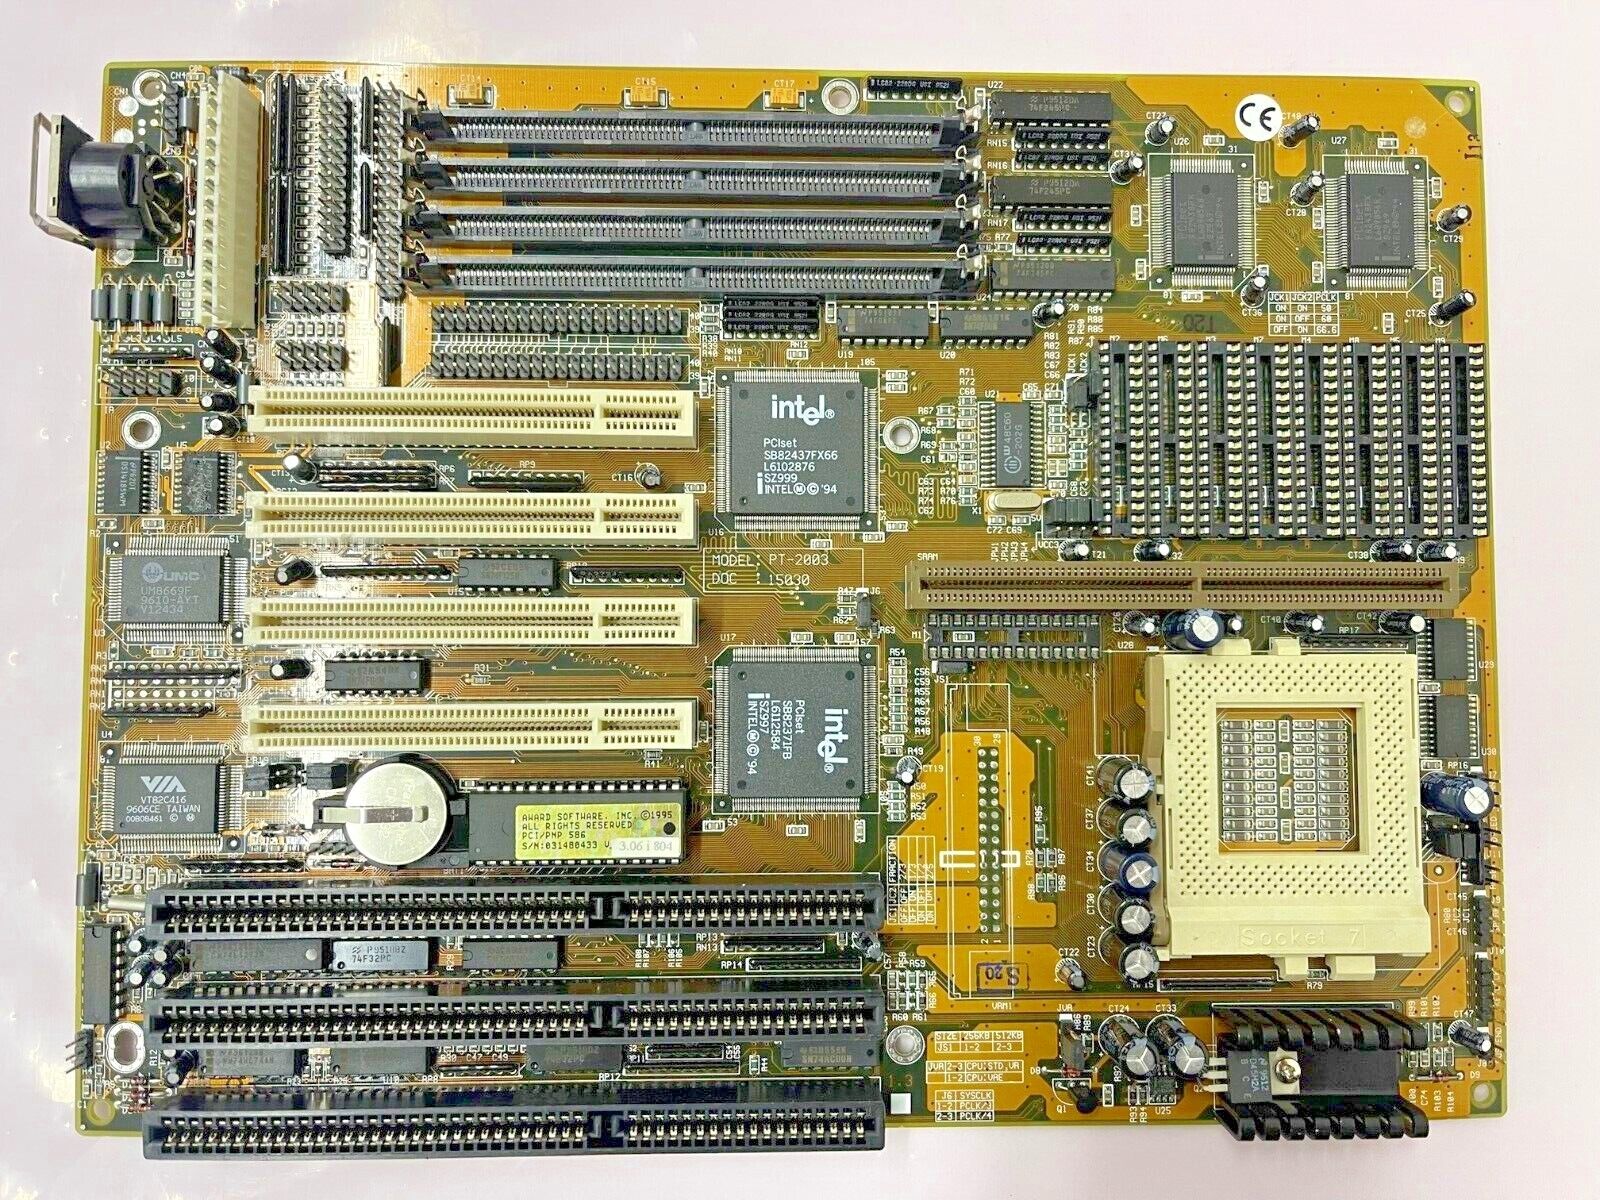 RARE VINTAGE FIC PT-2003 INTEL PCIset PENTIUM AT SOCKET 7 MOTHERBOARD MBMX37